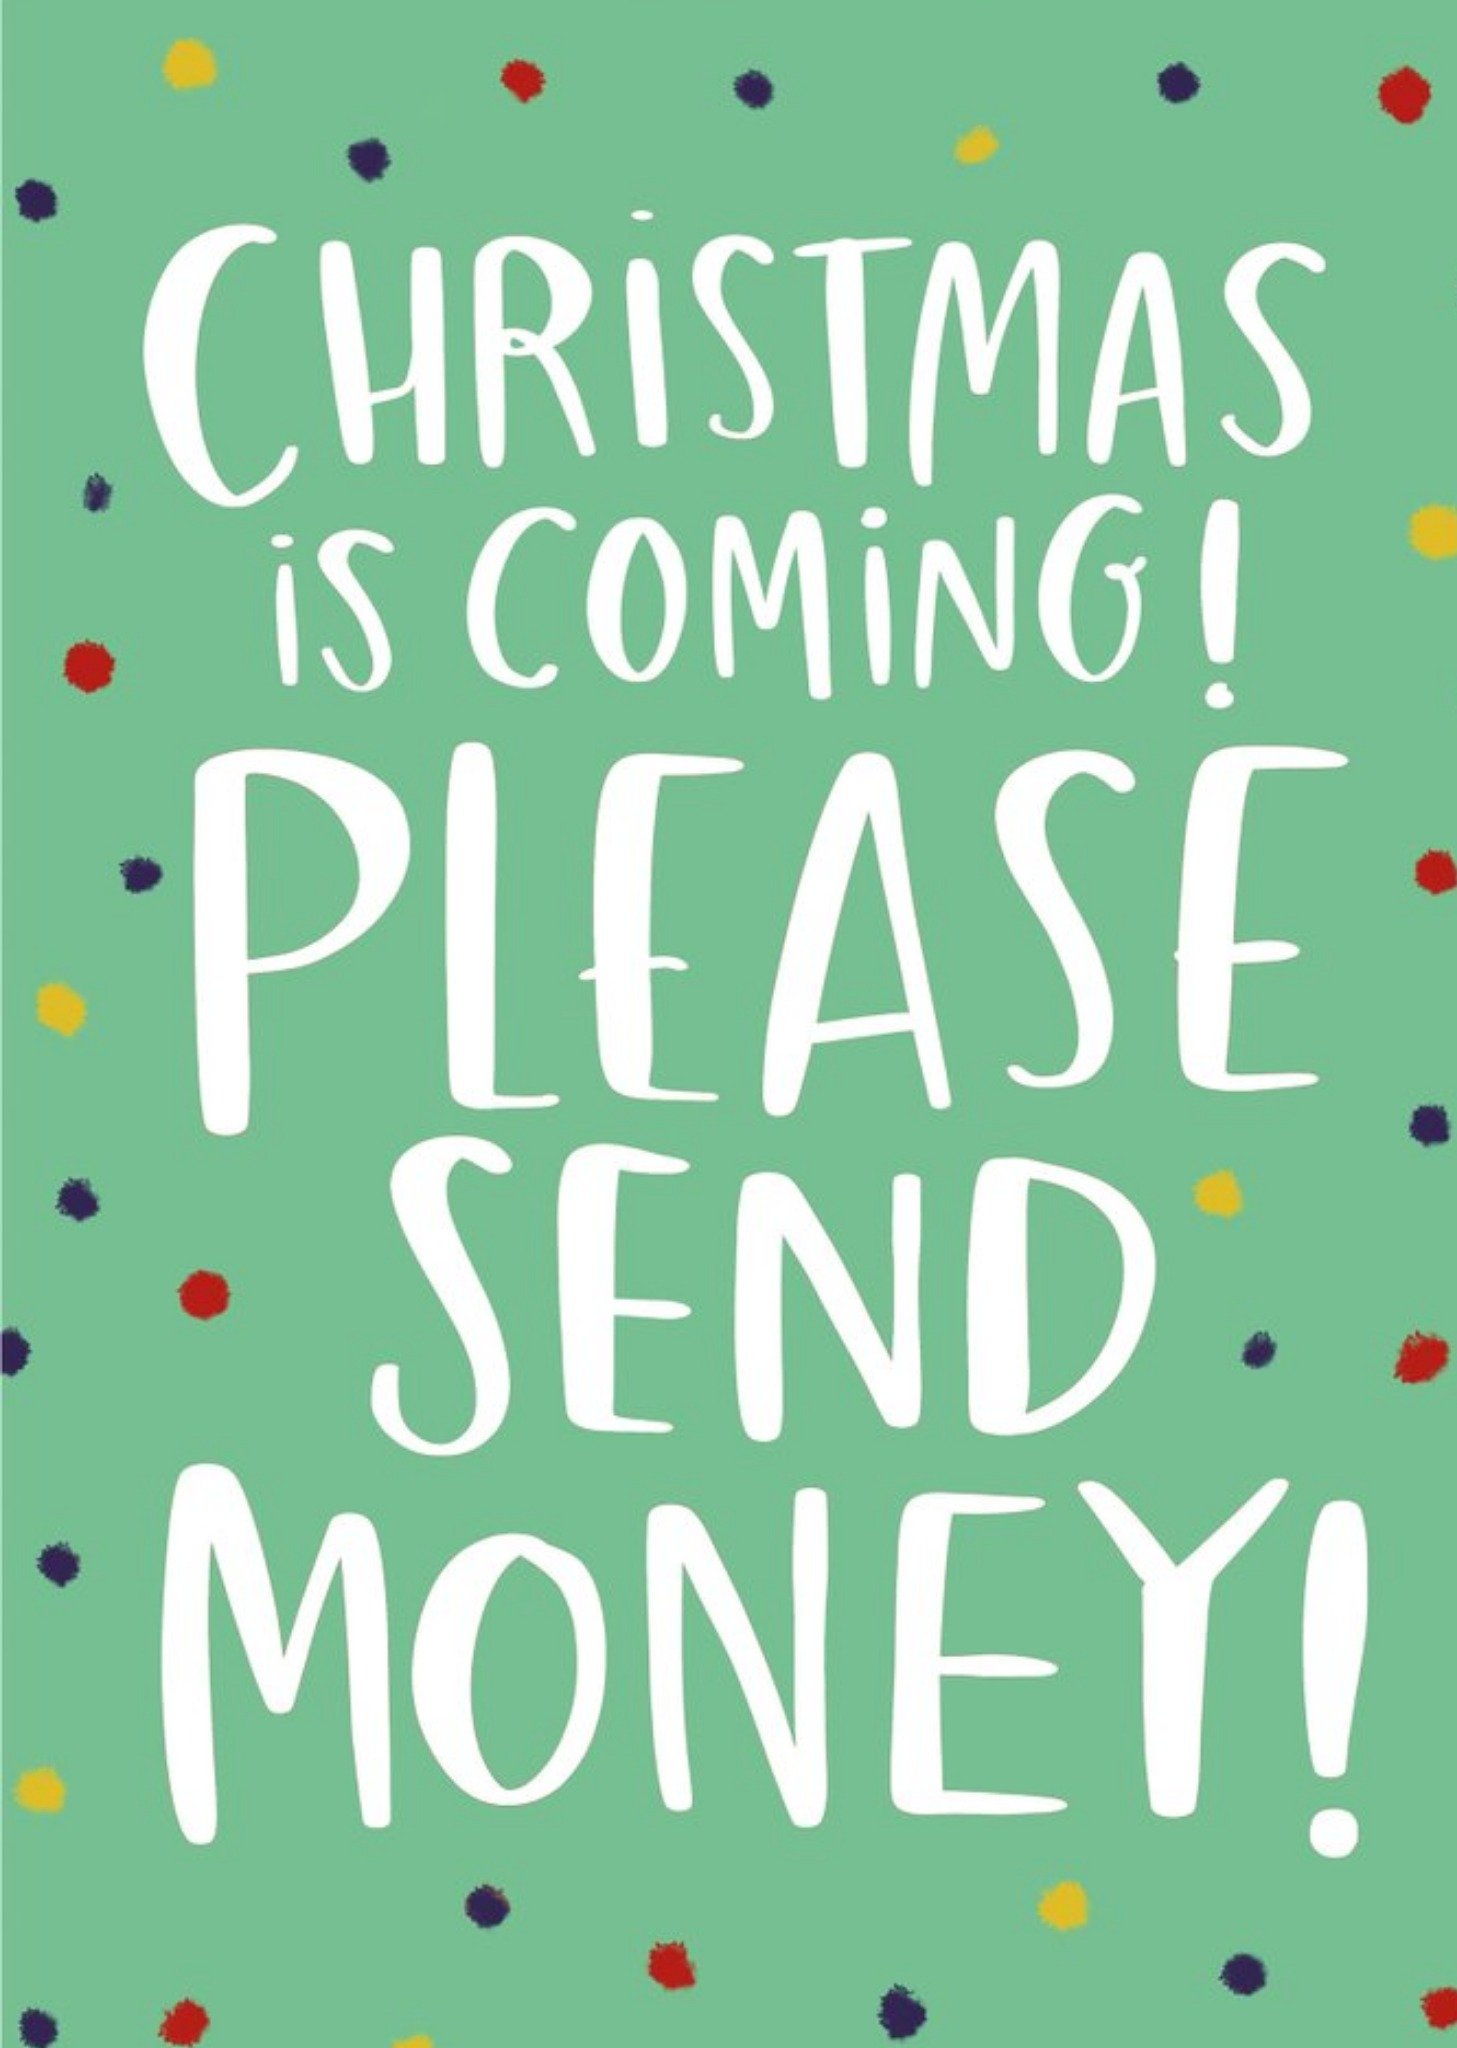 Moonpig Modern Typograhical Christmas Is Coming Please Send Money Card Ecard